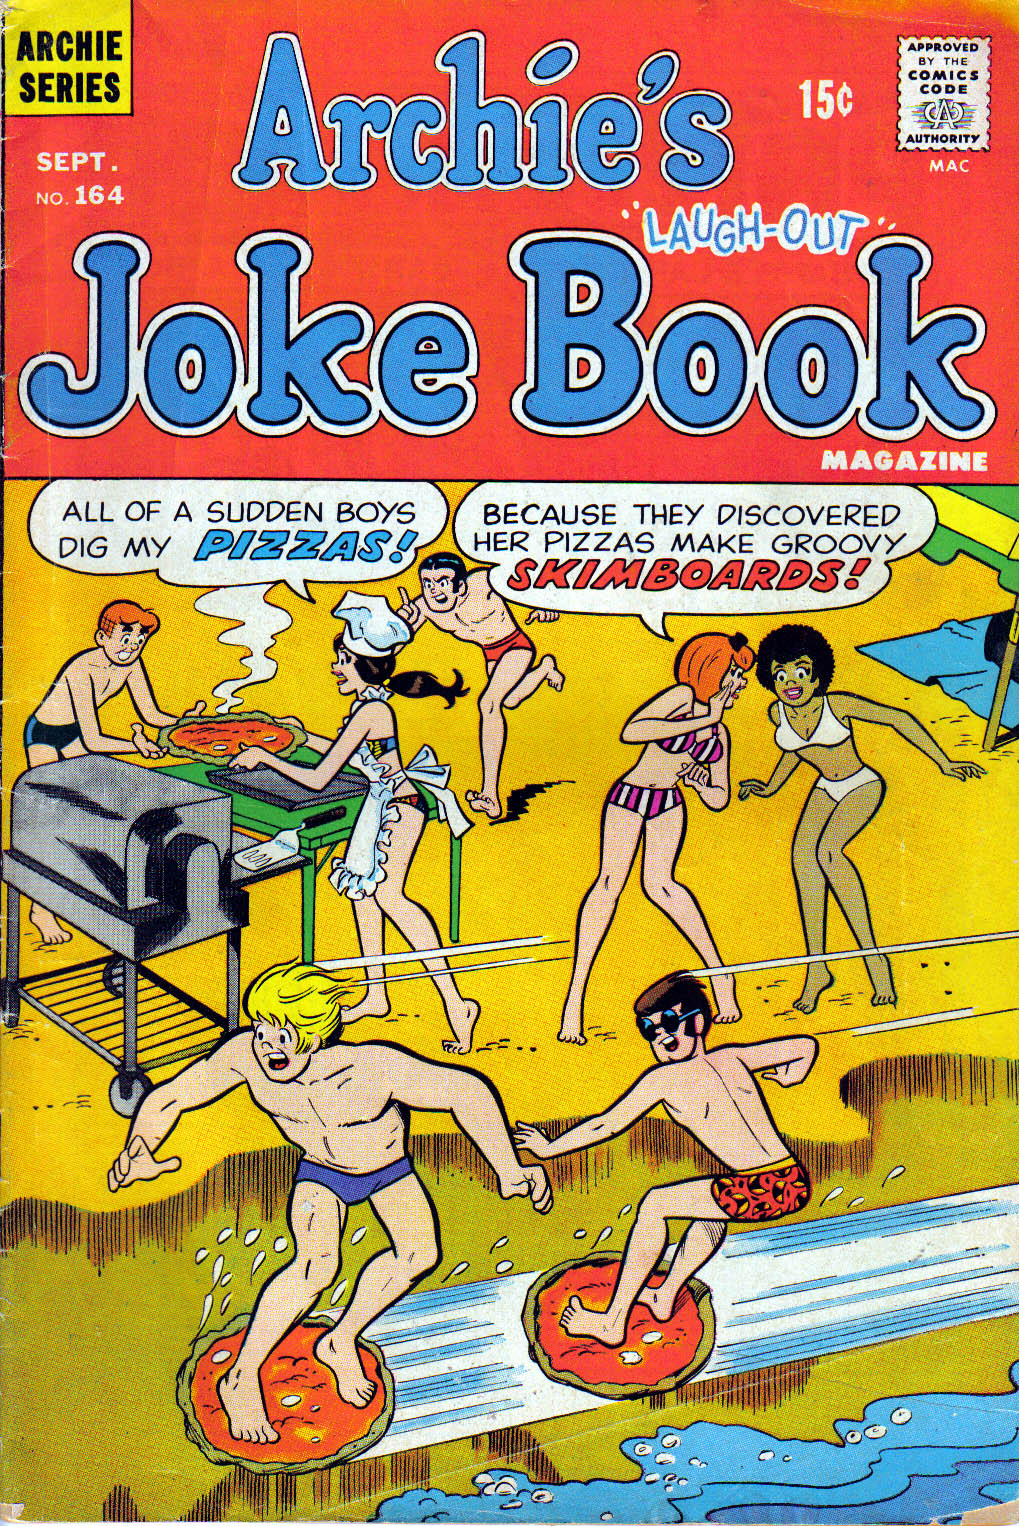 Archie's Joke Book Magazine issue 164 - Page 1